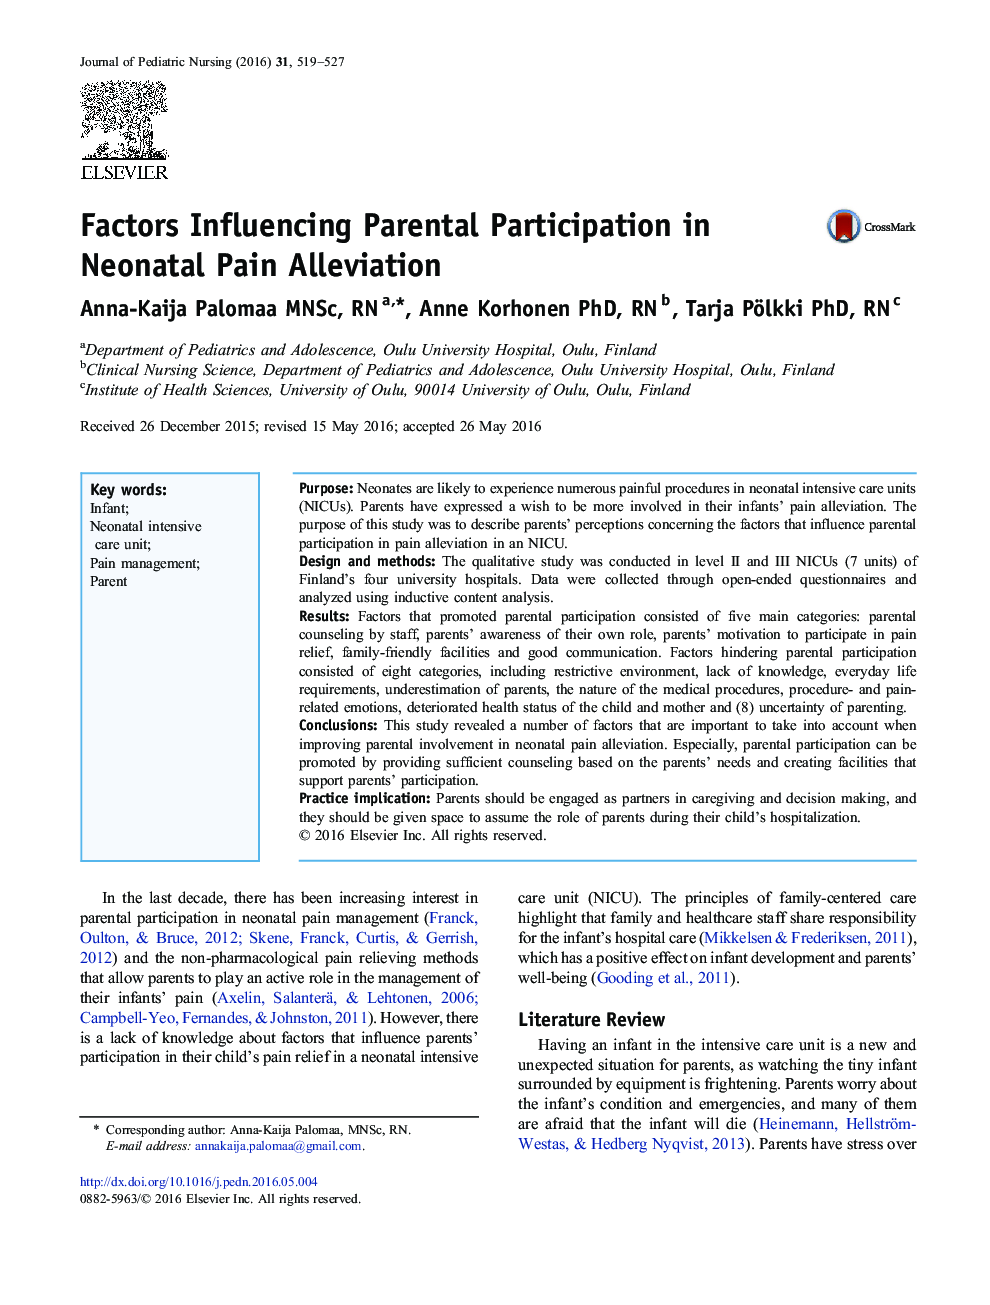 Factors Influencing Parental Participation in Neonatal Pain Alleviation